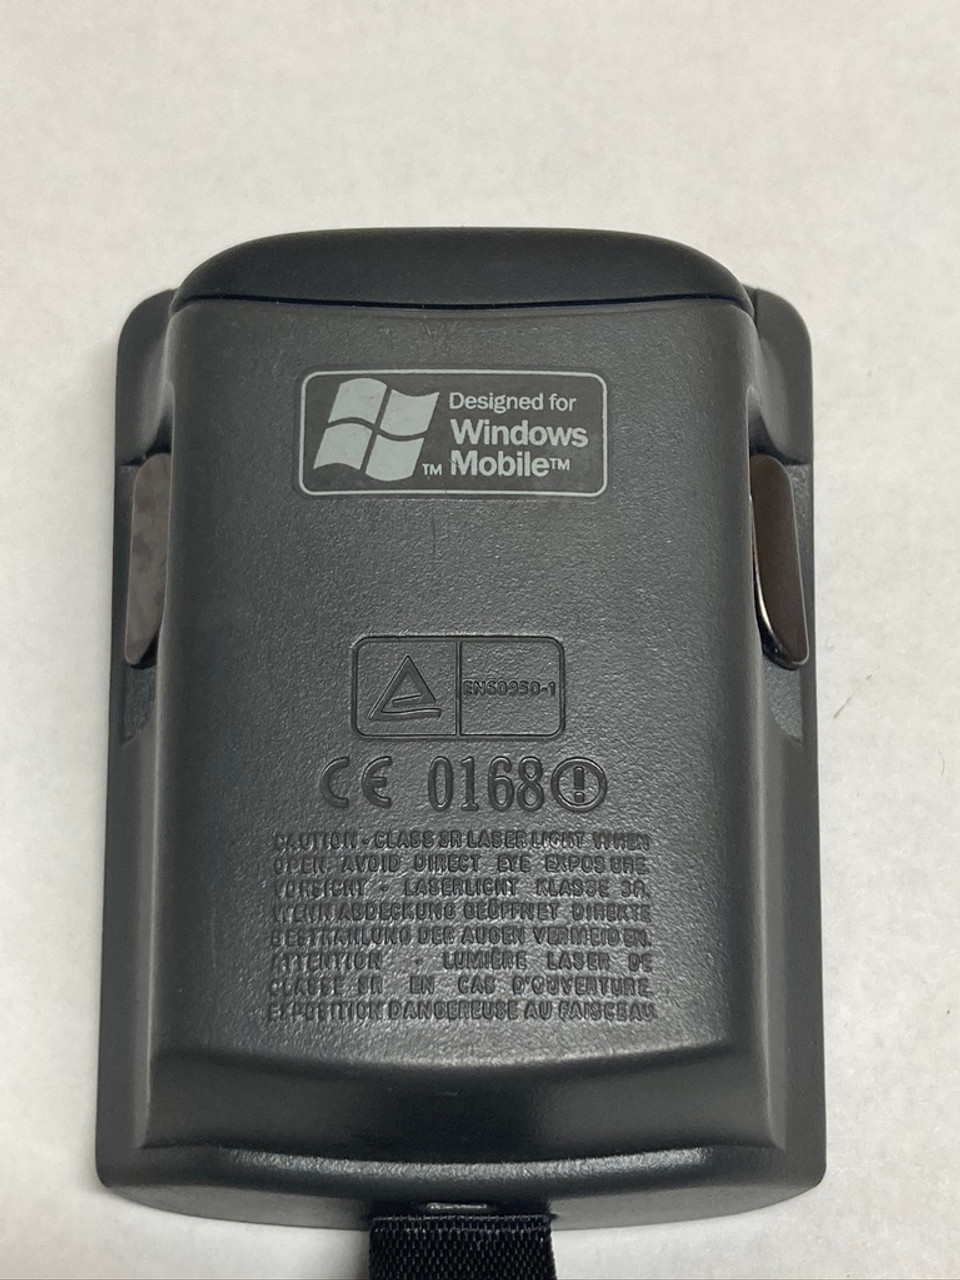 Windows Mobile Handheld Computer Cover EN 60950-1